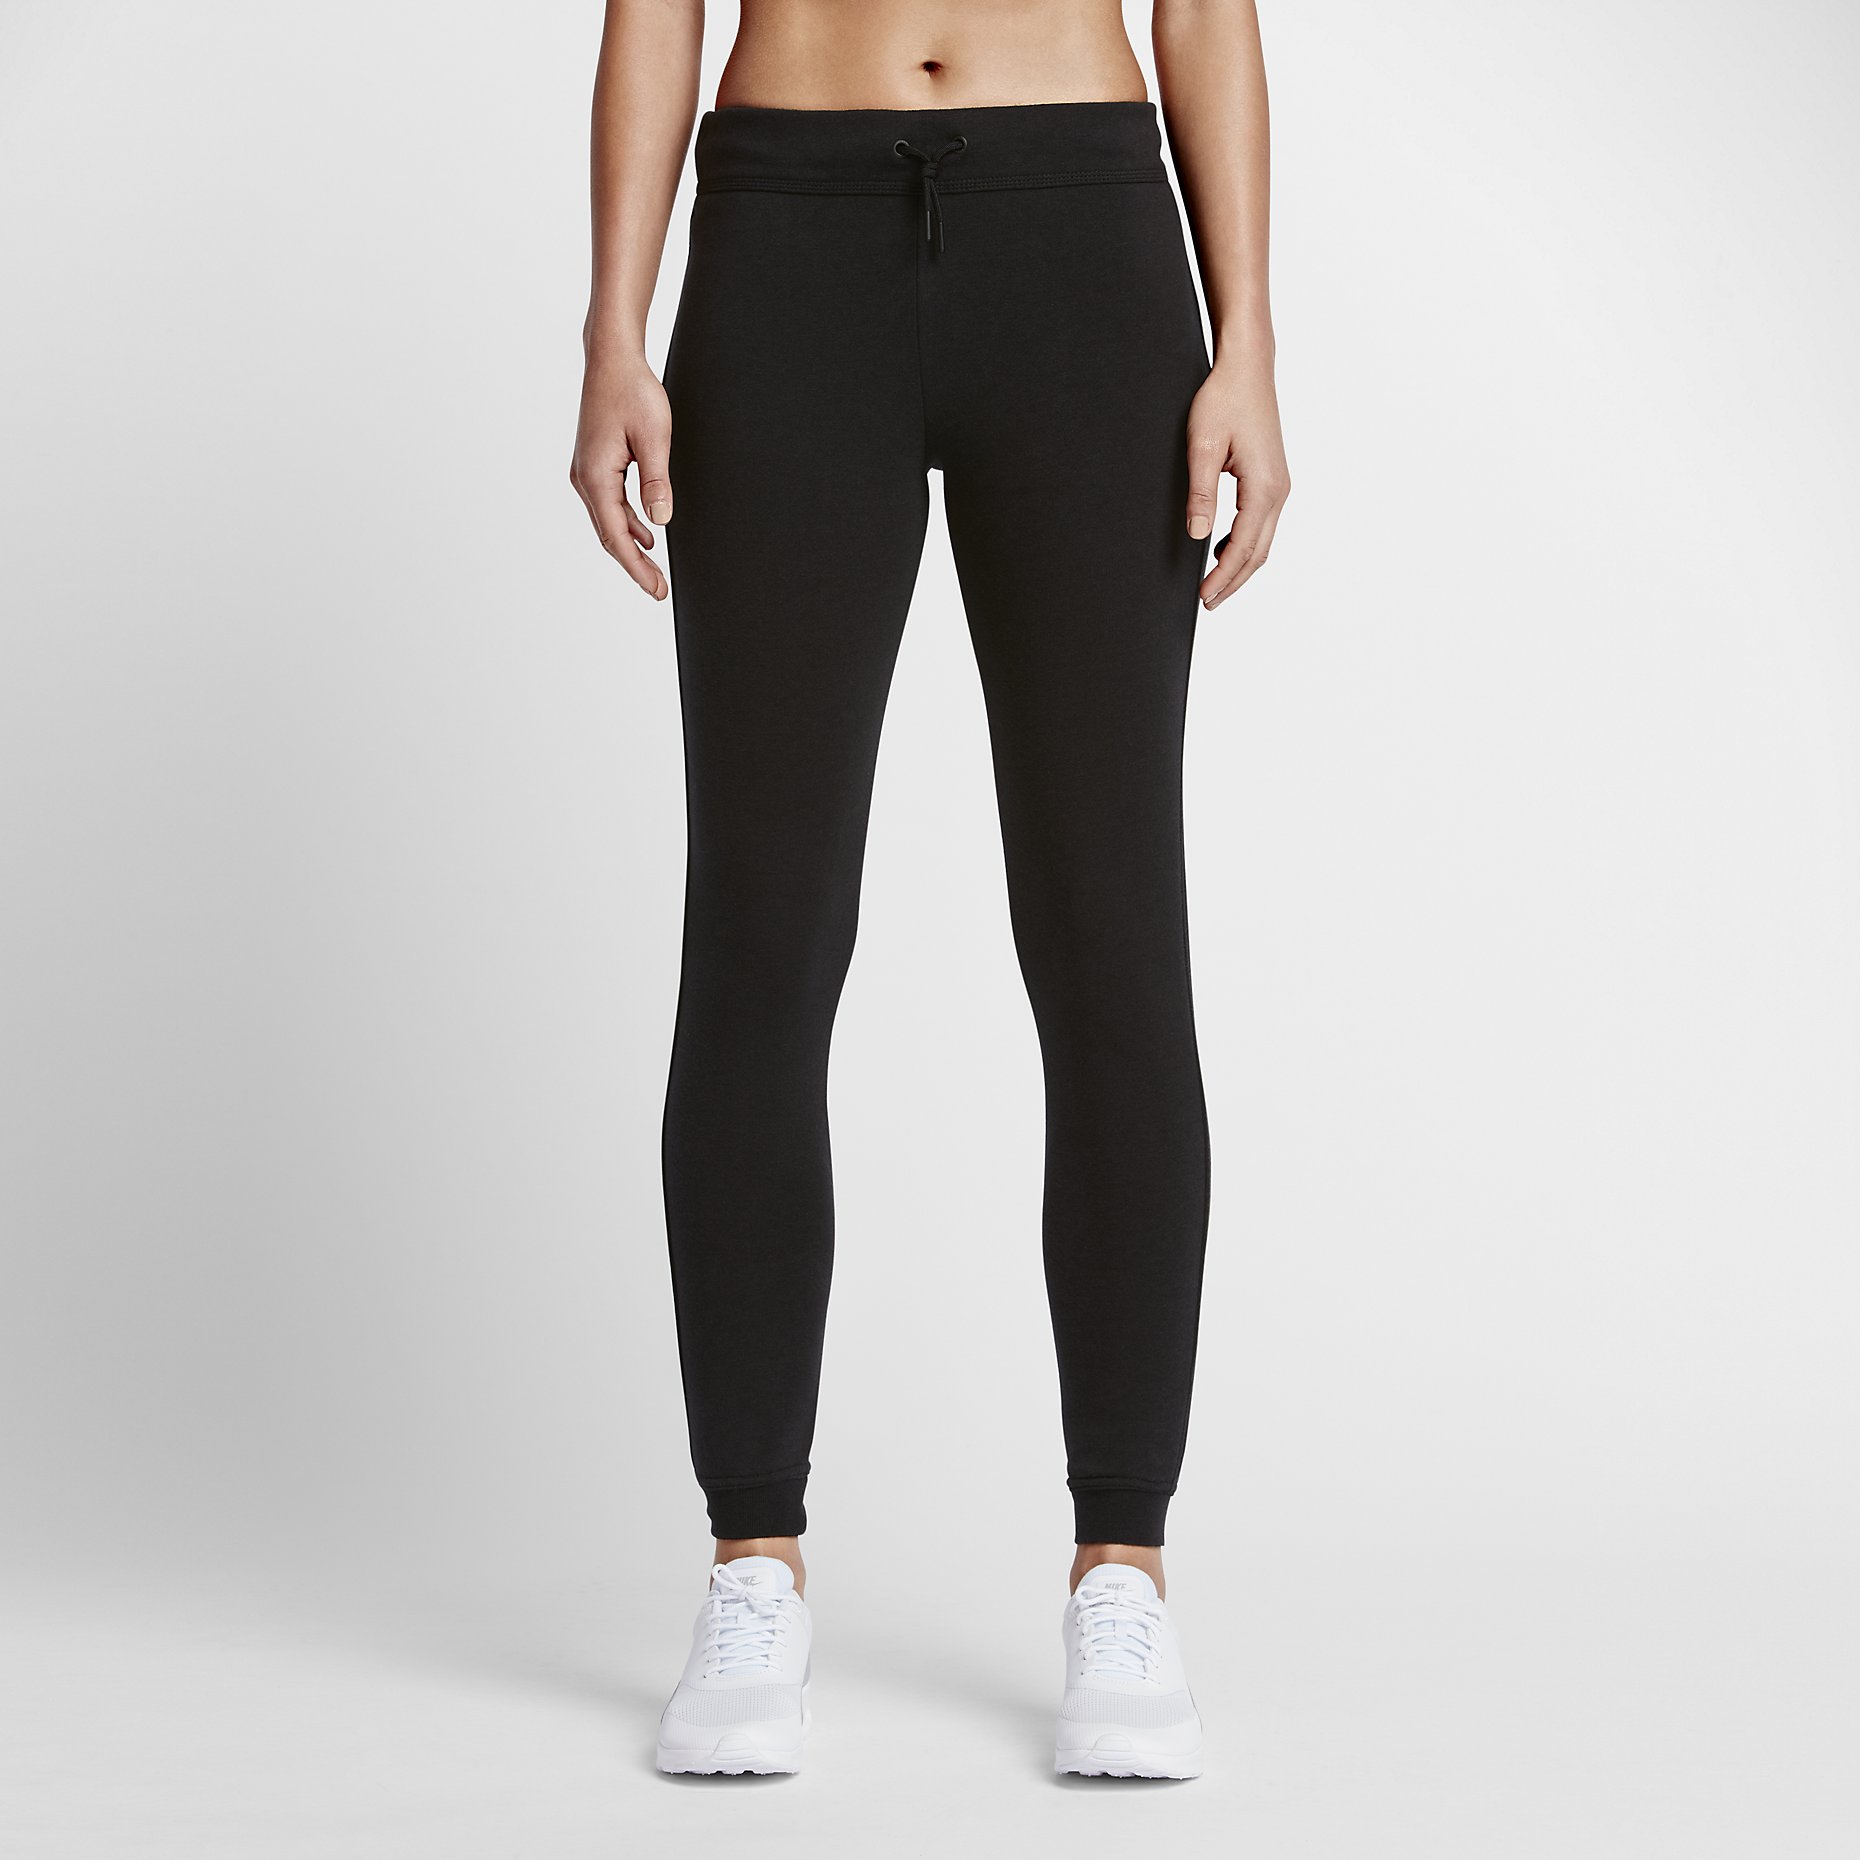 Nike, Pro Tight New női nadrág, Nők, root, Fekete